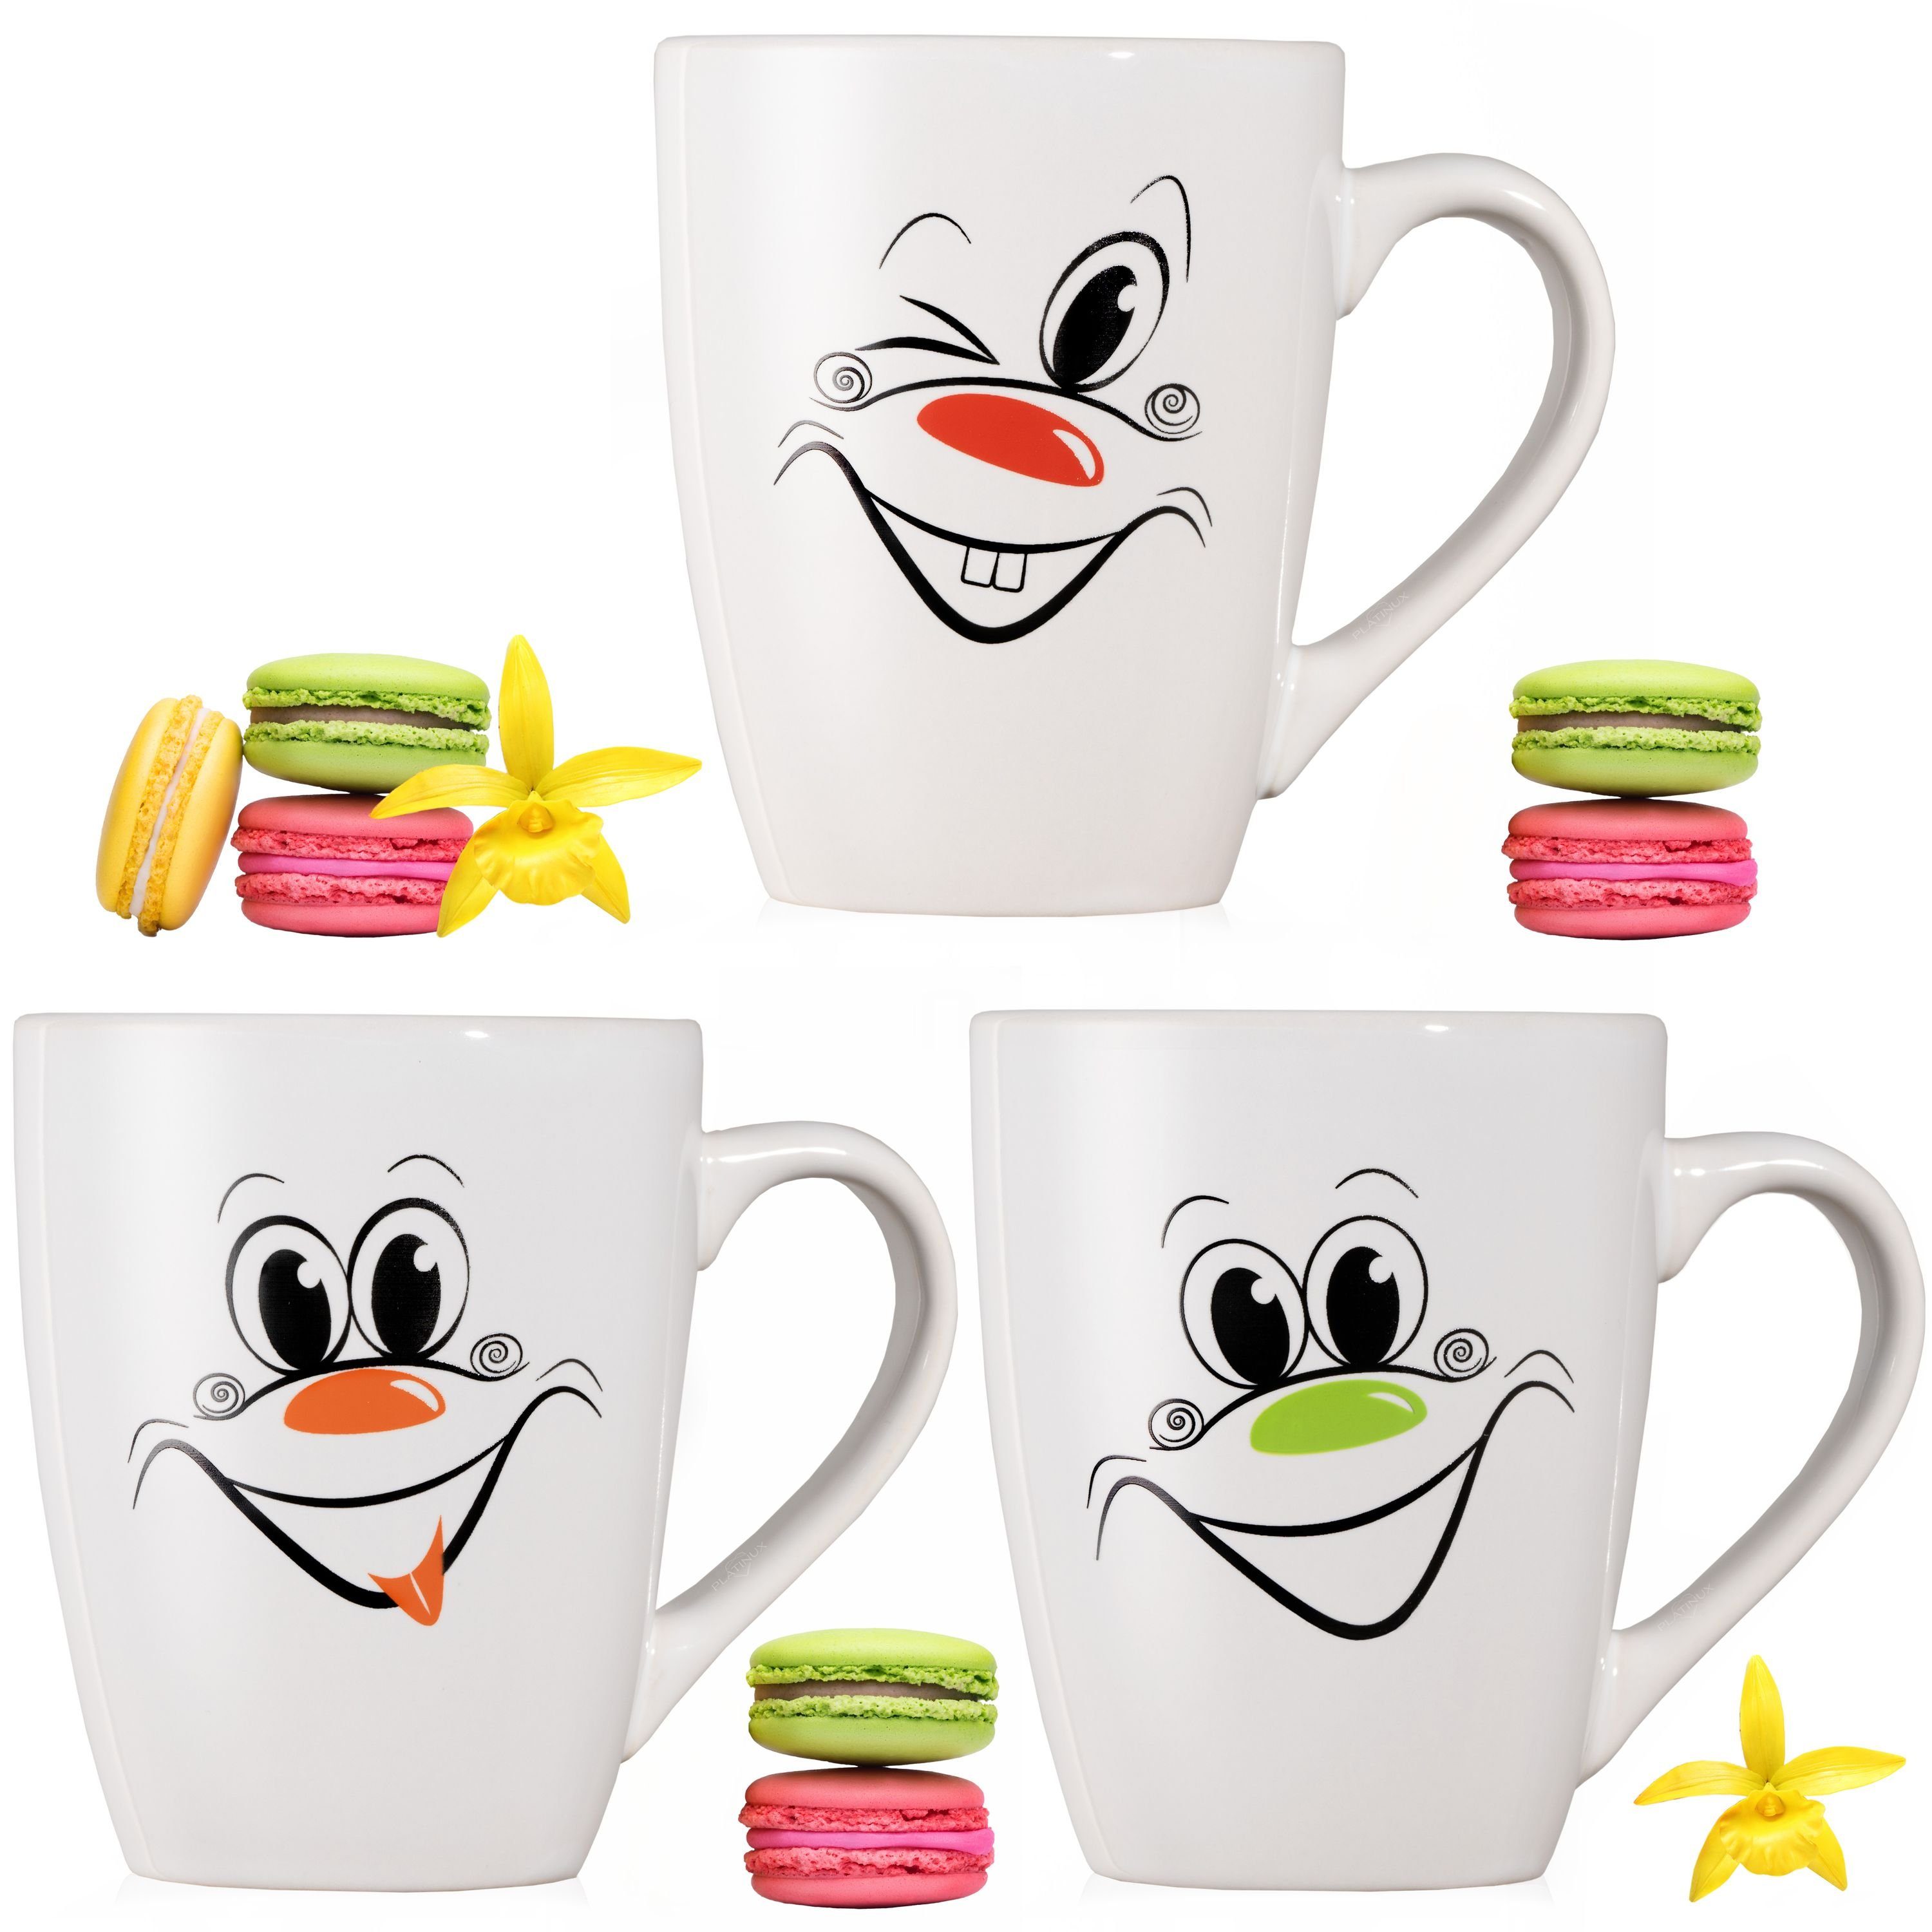 mit Lustige Gesichter Motiv Lustig Teetasse Karneval Set Teebecher Tasse Kaffeebecher 250ml Keramik, PLATINUX Kaffeetassen,